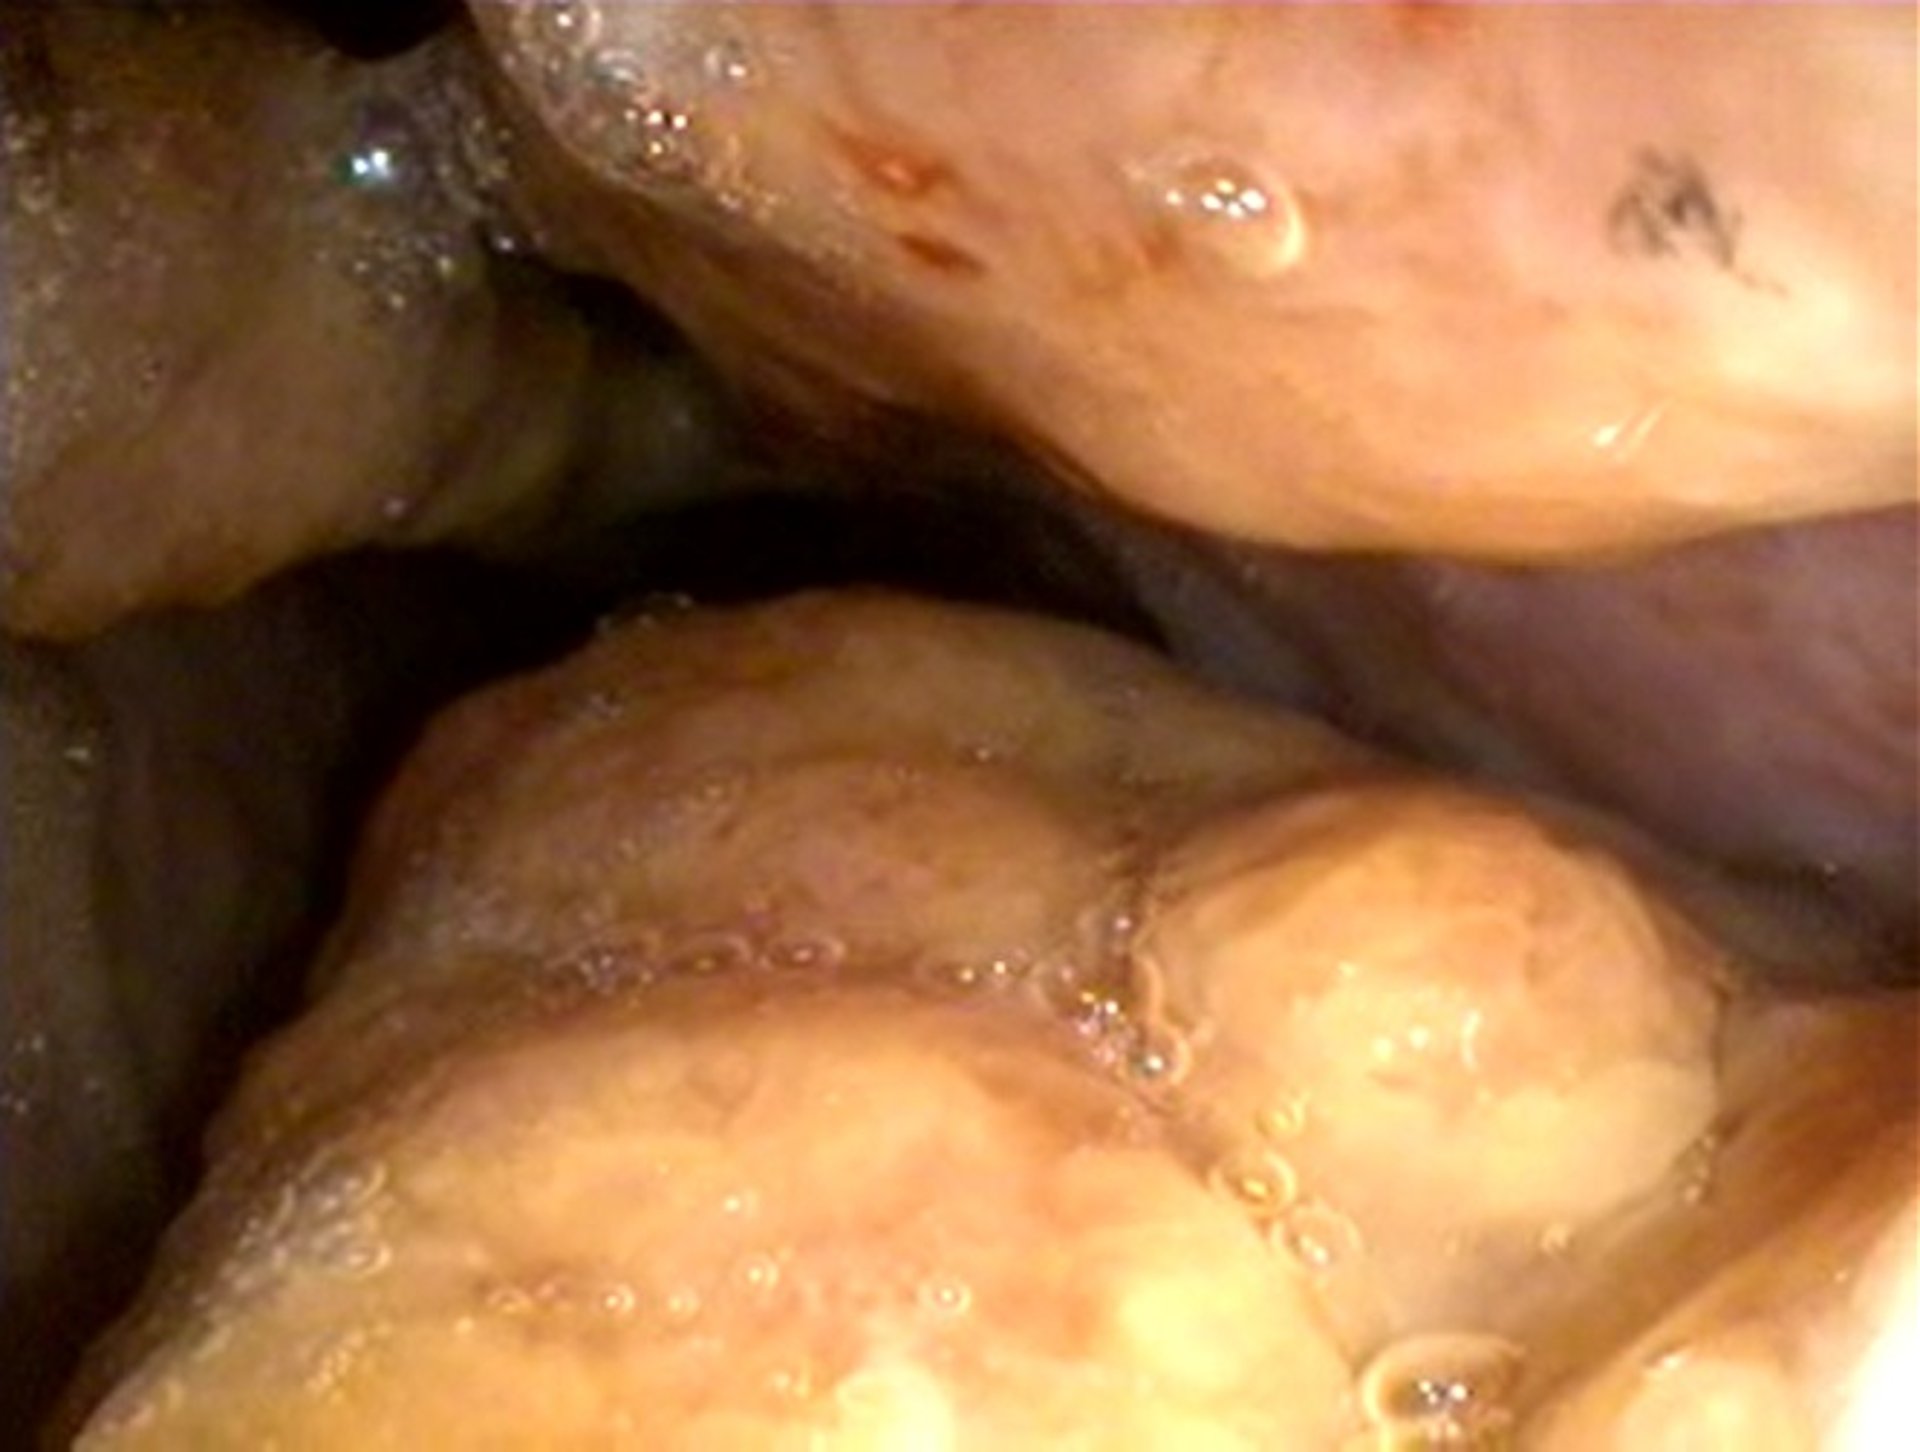 Rhinoscopic view, nasal cavity